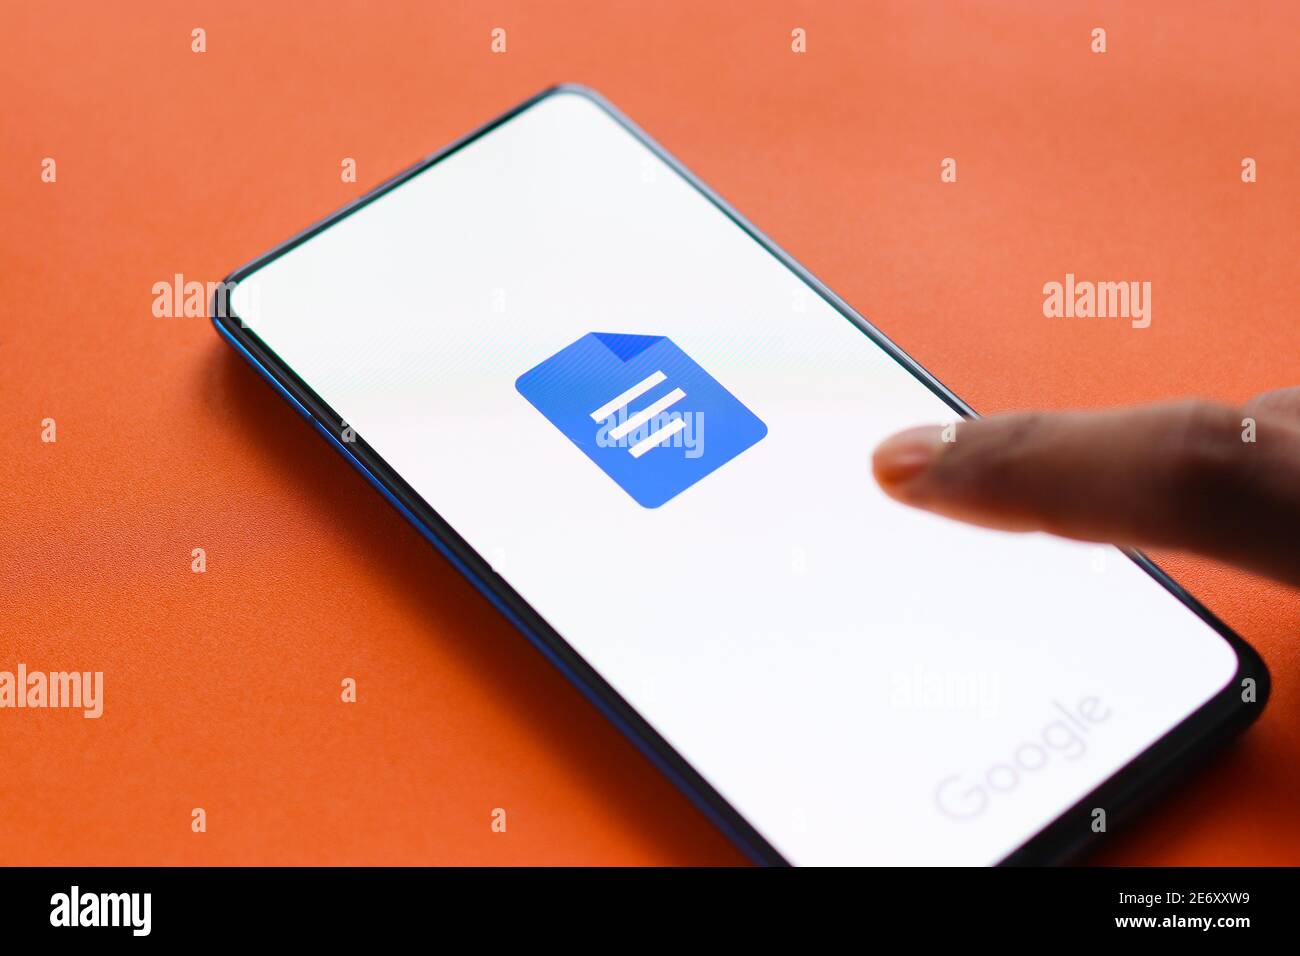 Assam, india - January 31, 2021 : Google Docs logo on phone screen stock image. Stock Photo